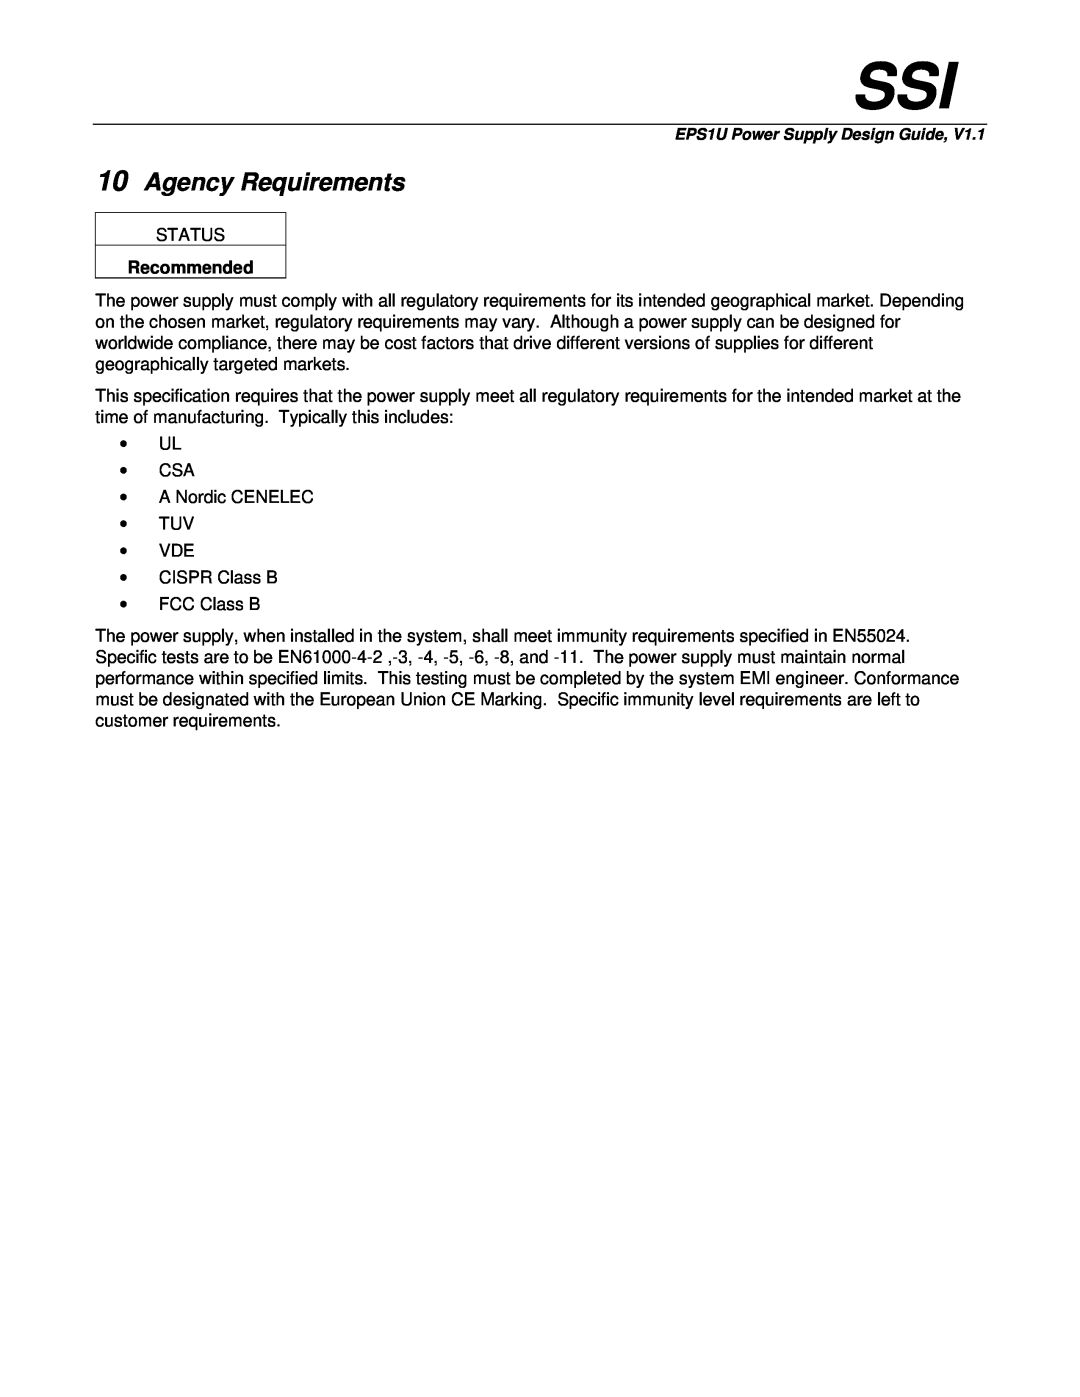 Intel EPS1U manual Agency Requirements 